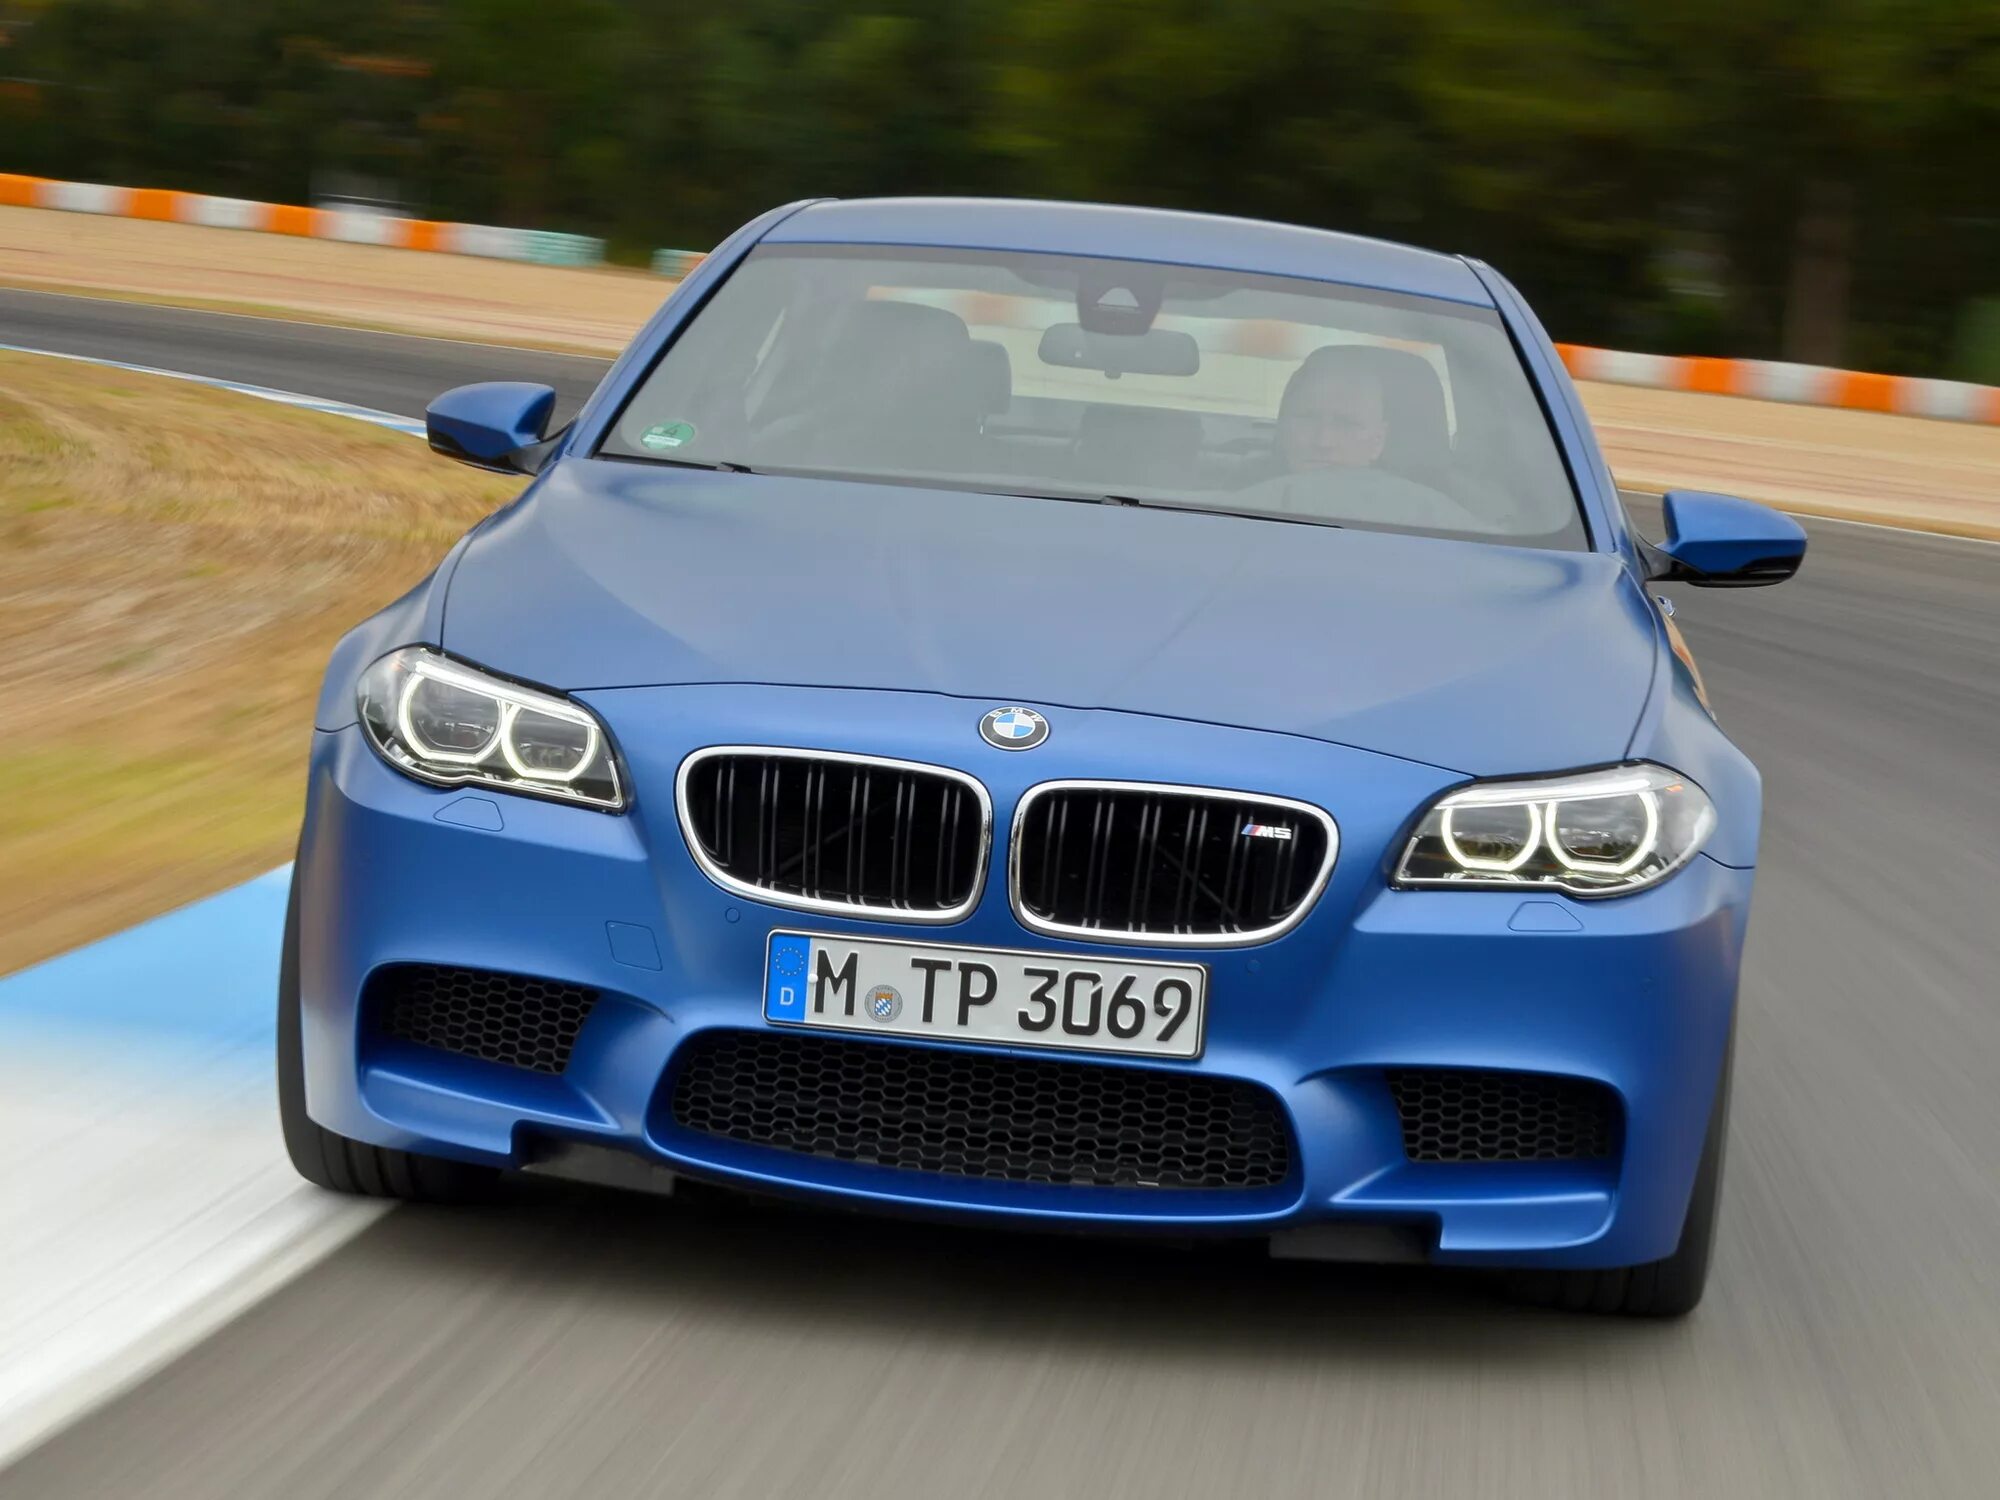 Bmw m 5 10. BMW m5 f10 LCI. BMW m5 f10 Competition. BMW m5 2016. BMW m5 f10 2013.